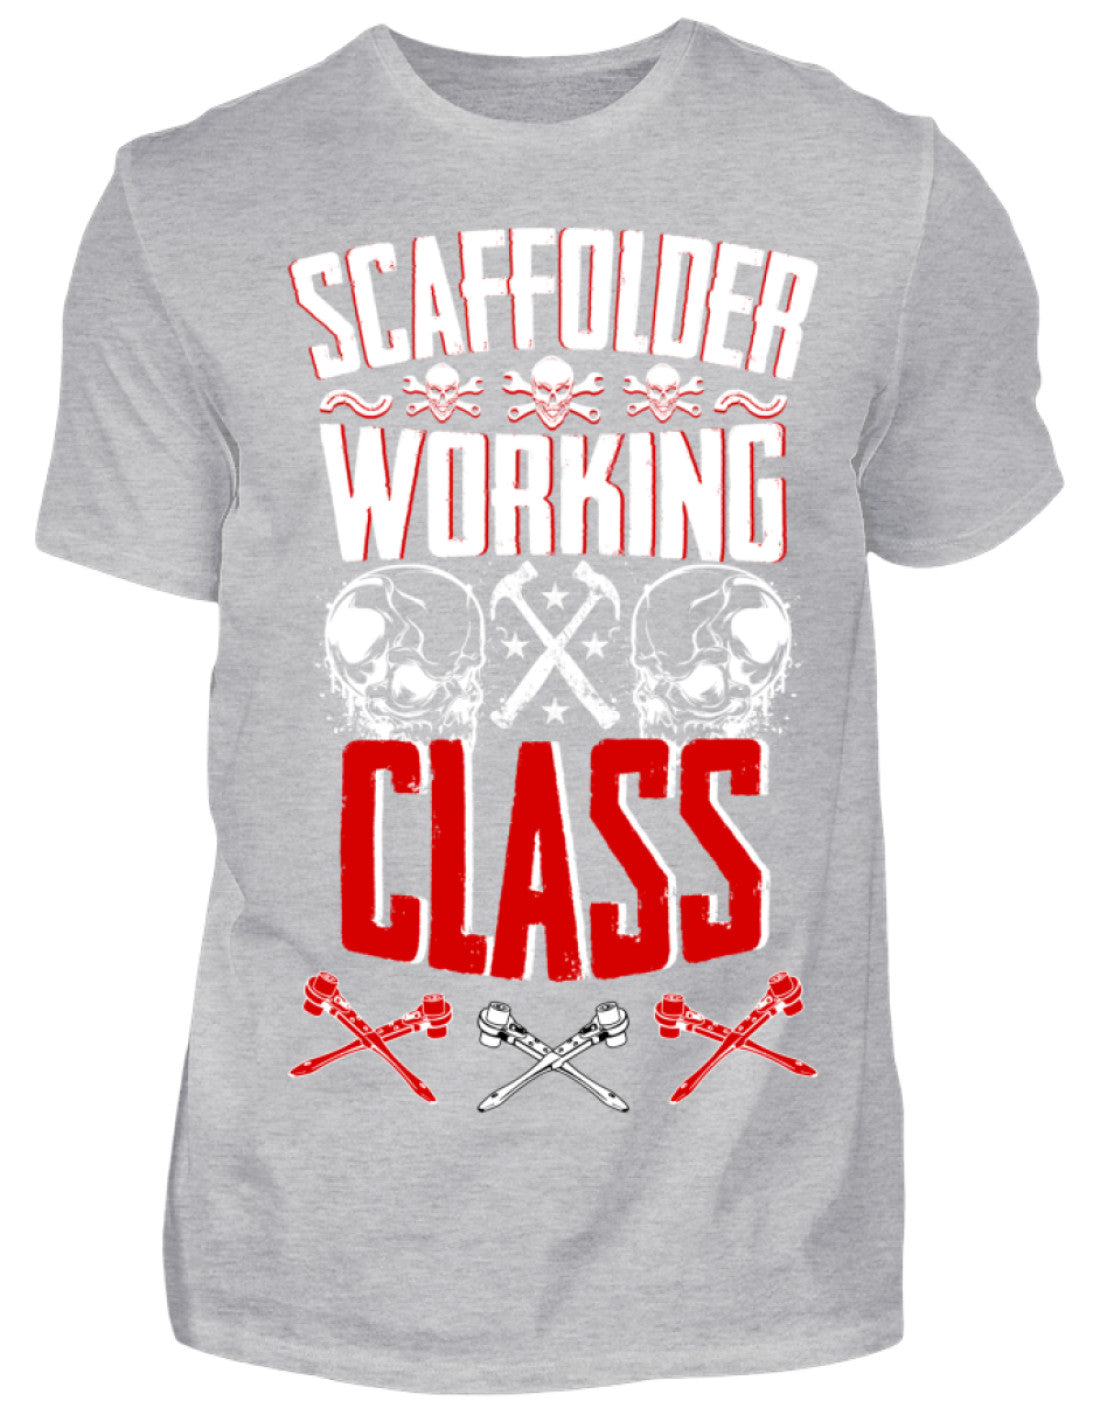 SCAFFOLDER WORKING CLASS €24.95 Gerüstbauer - Shop >>